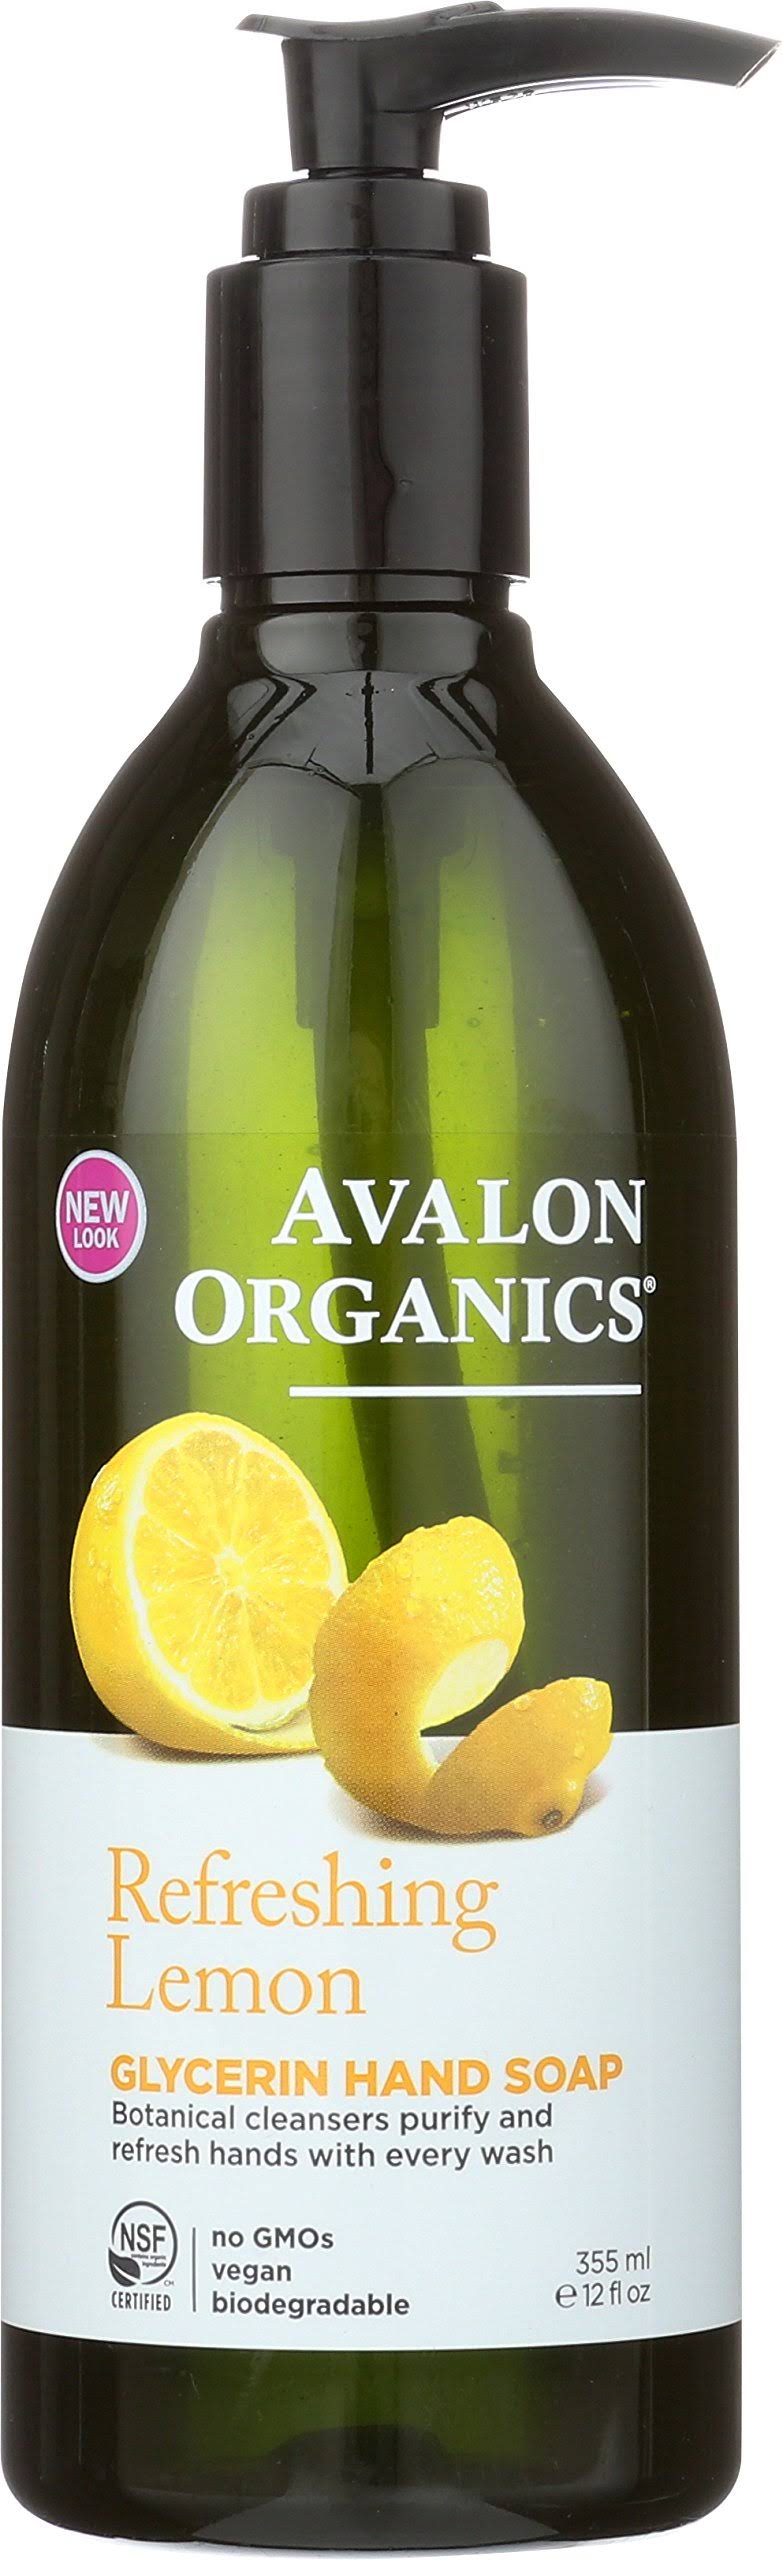 Avalon Organics Hand Soap, Glycerin, Refreshing Lemon - 12 fl oz